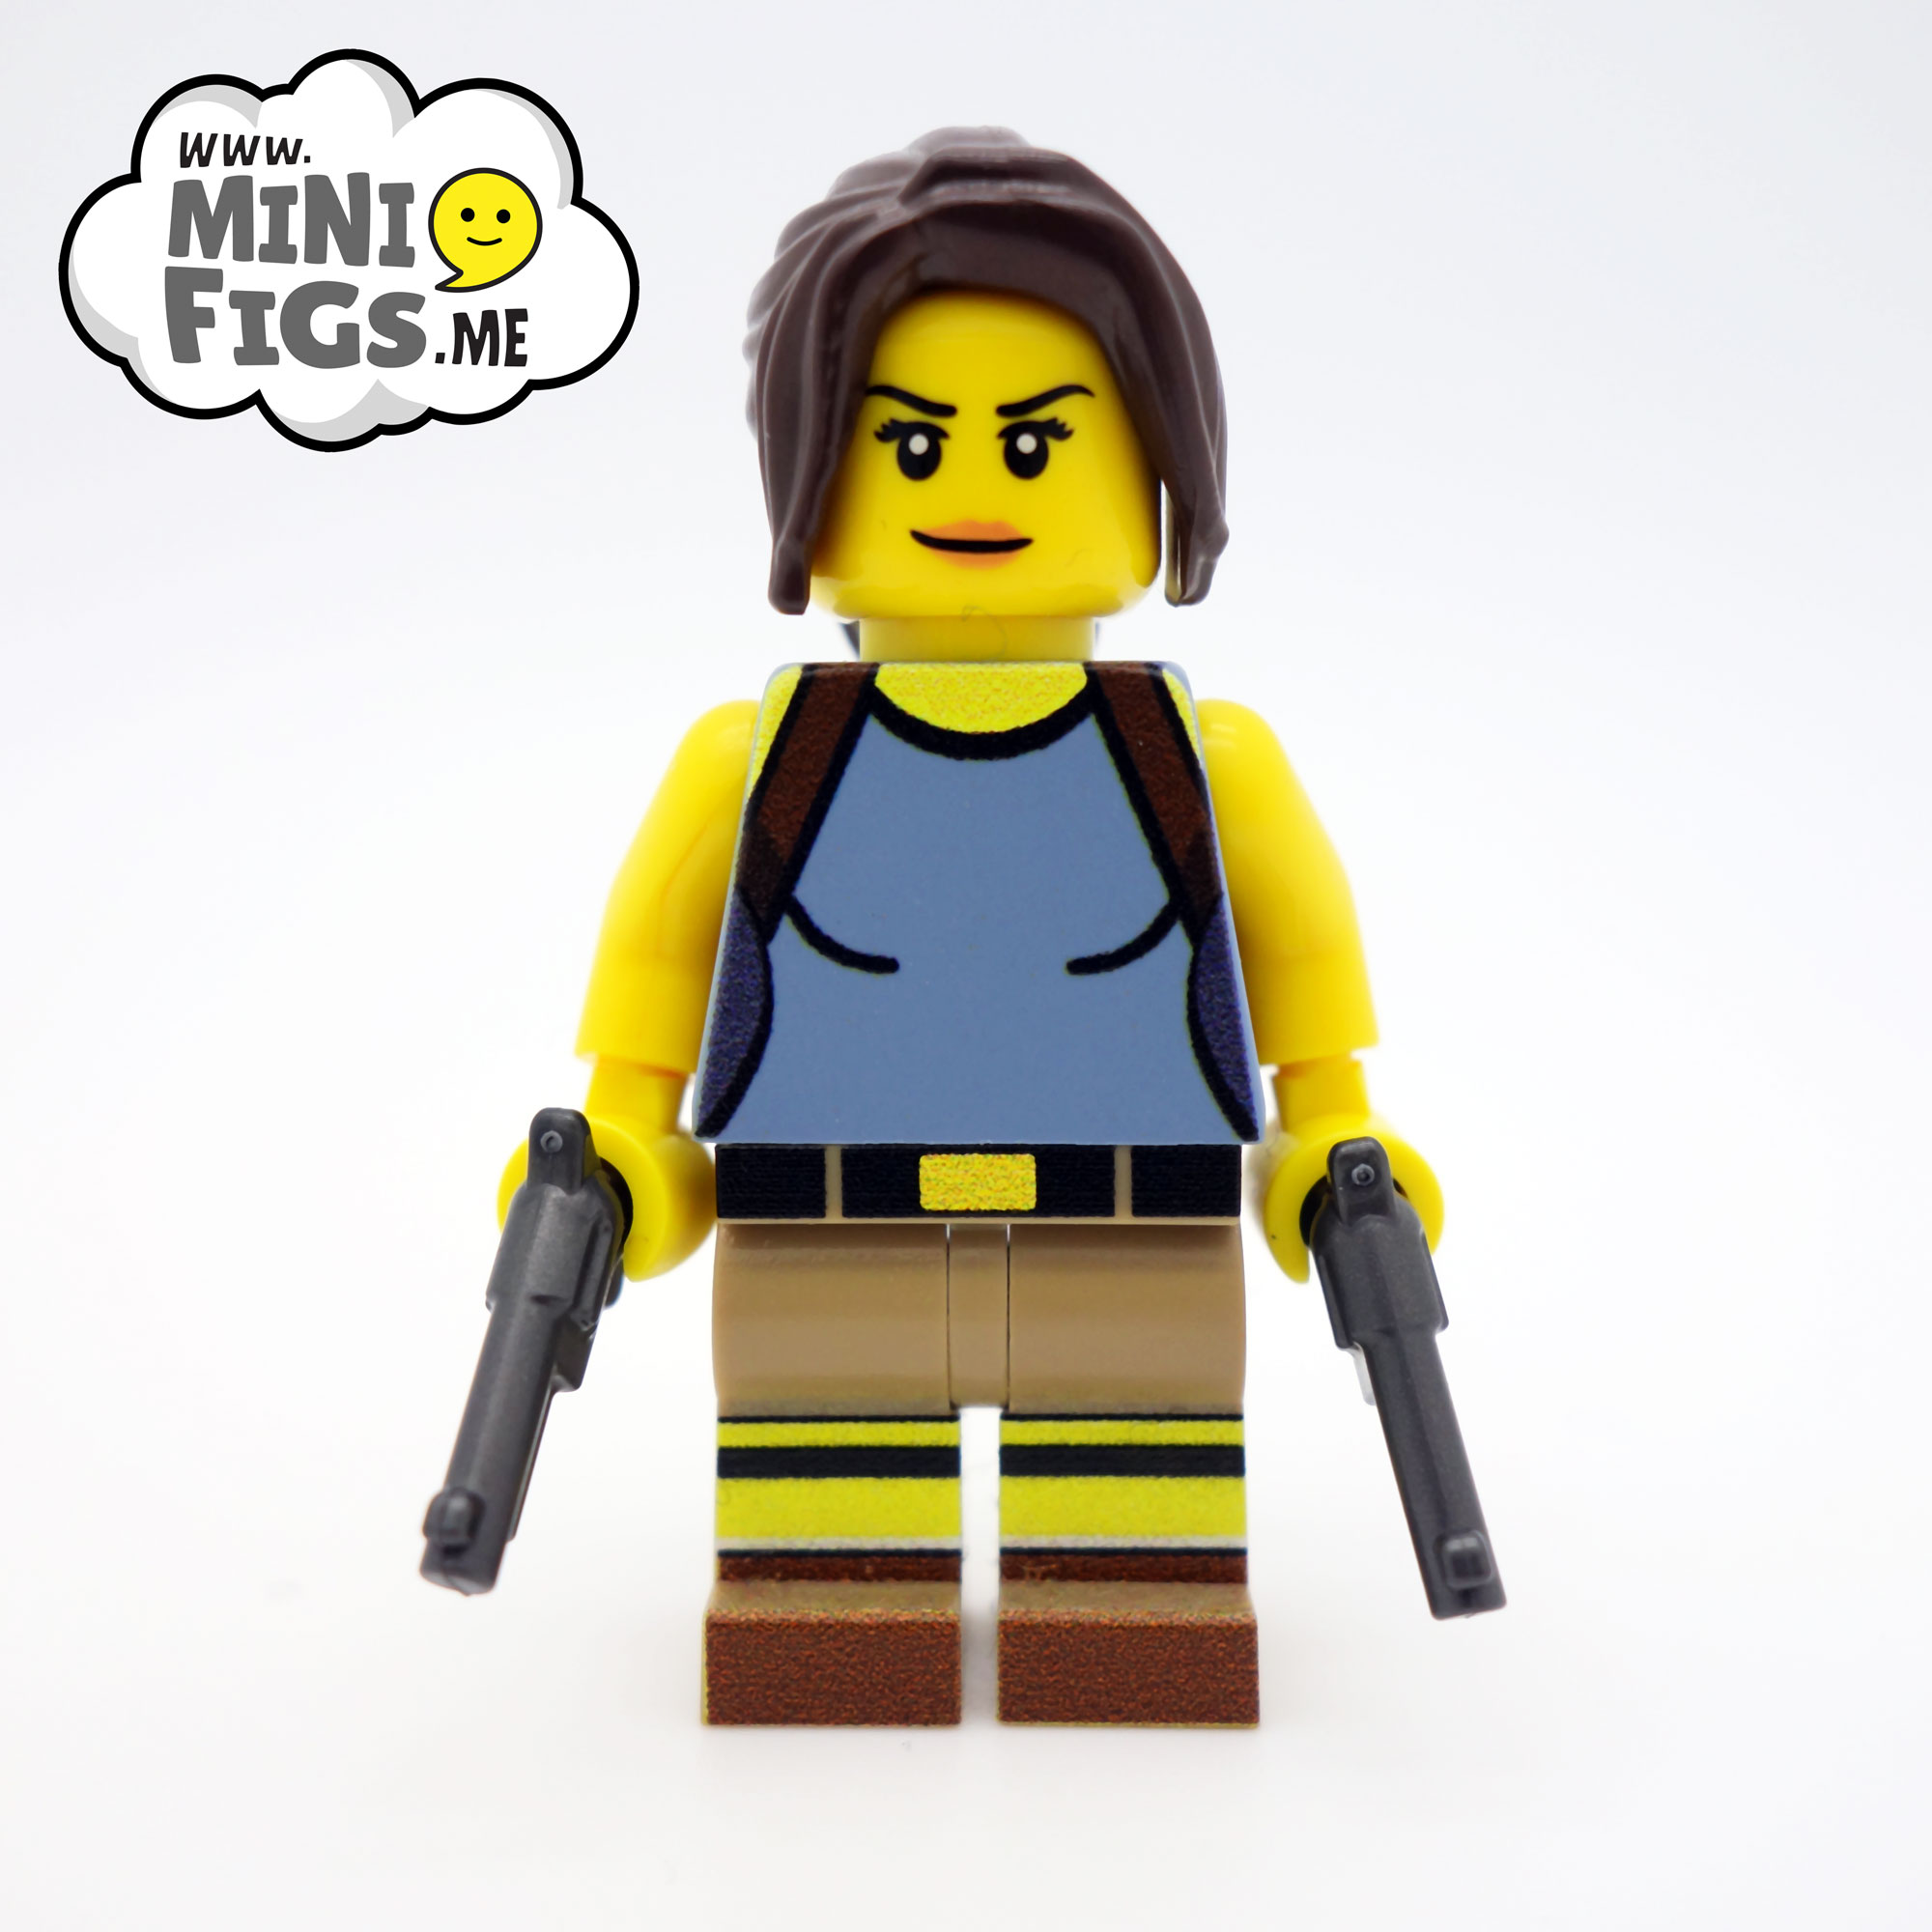 Lego, arrivano i personaggi ispirati ai videogame